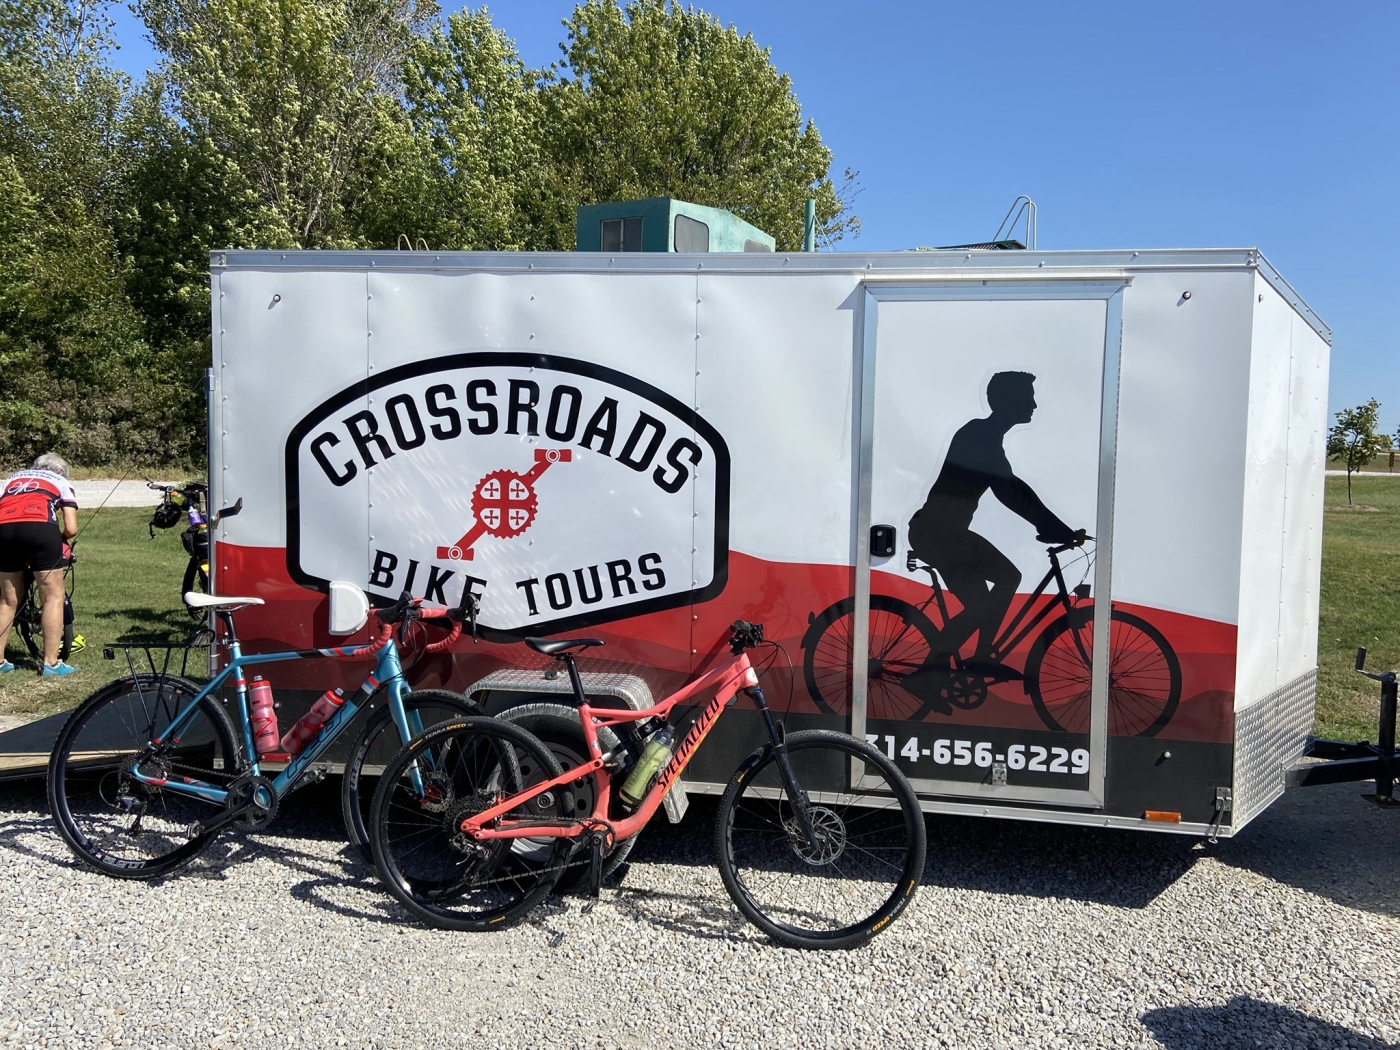 Outdoor scene of Crossroads Bike Tours trailer and bikes 